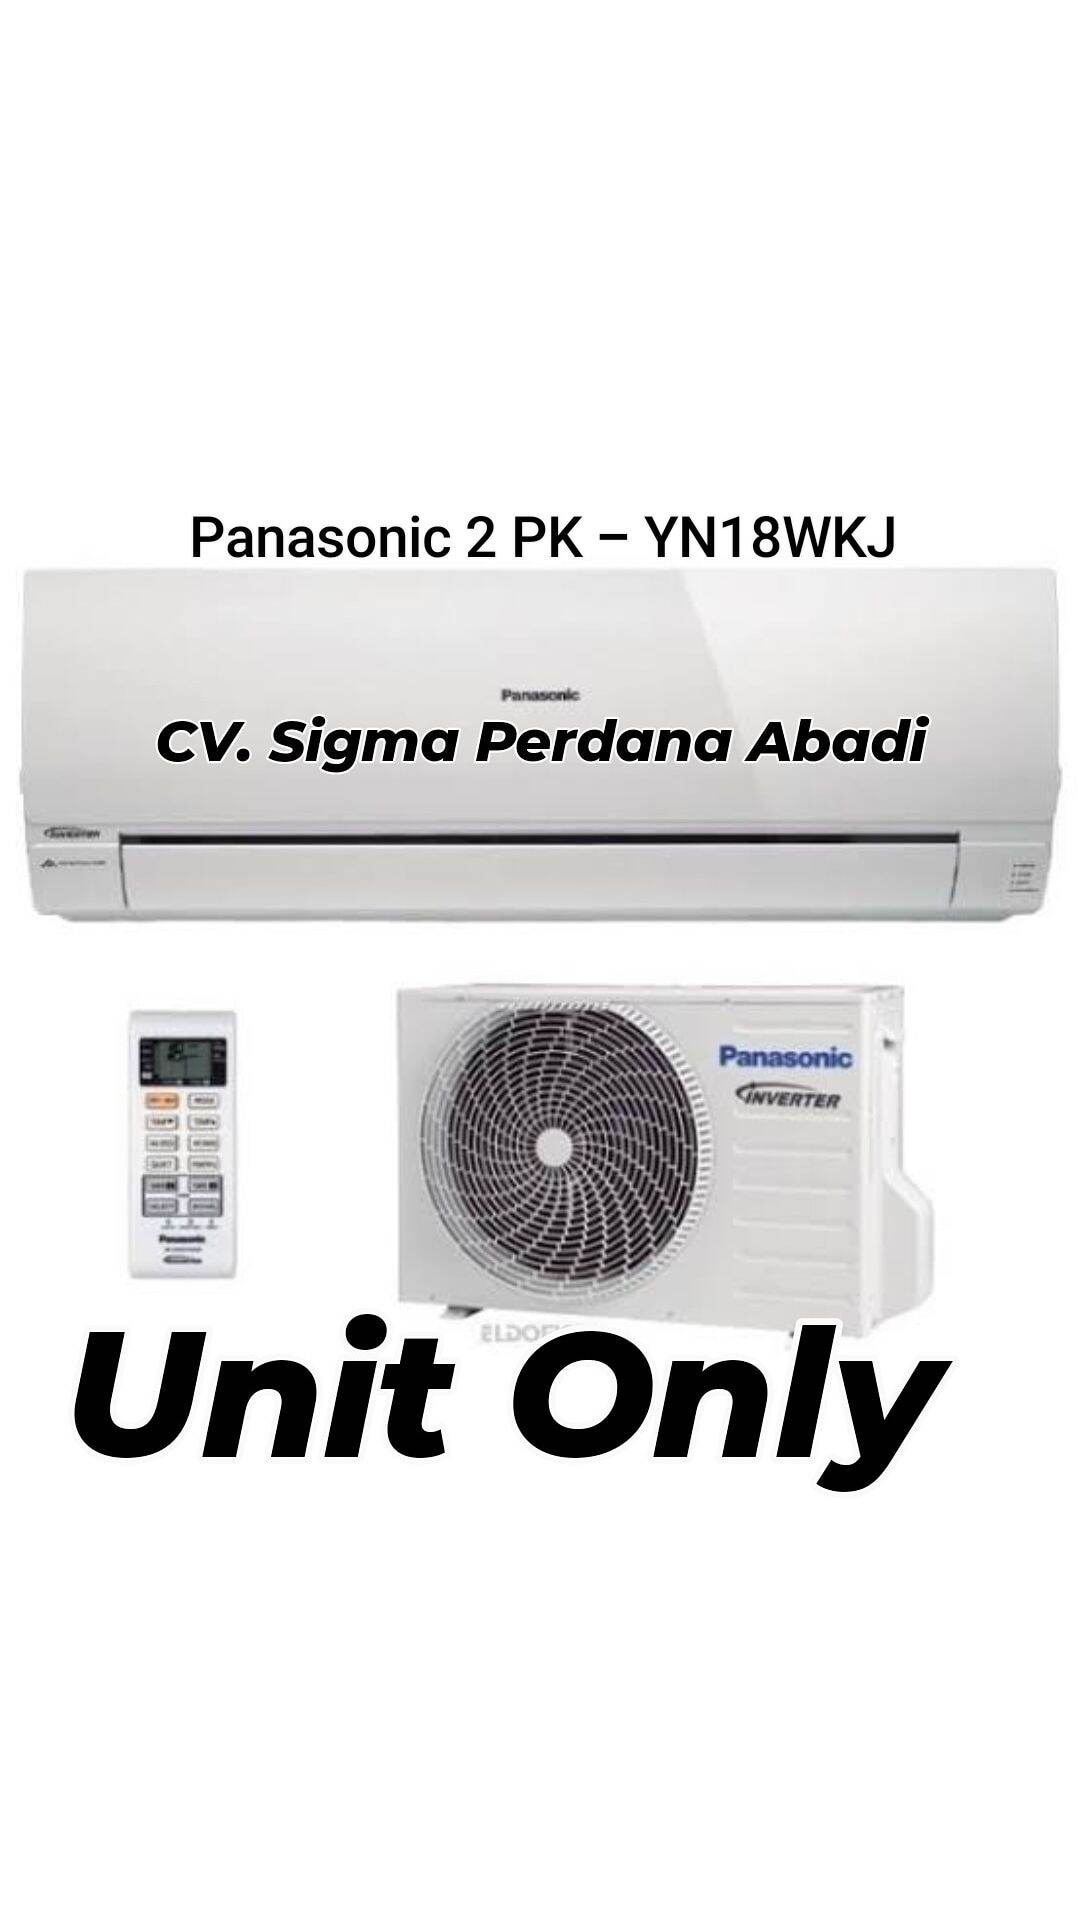 Jual Ac Outdoor Panasonic Terbaru - Sep 2022 | Lazada.co.id